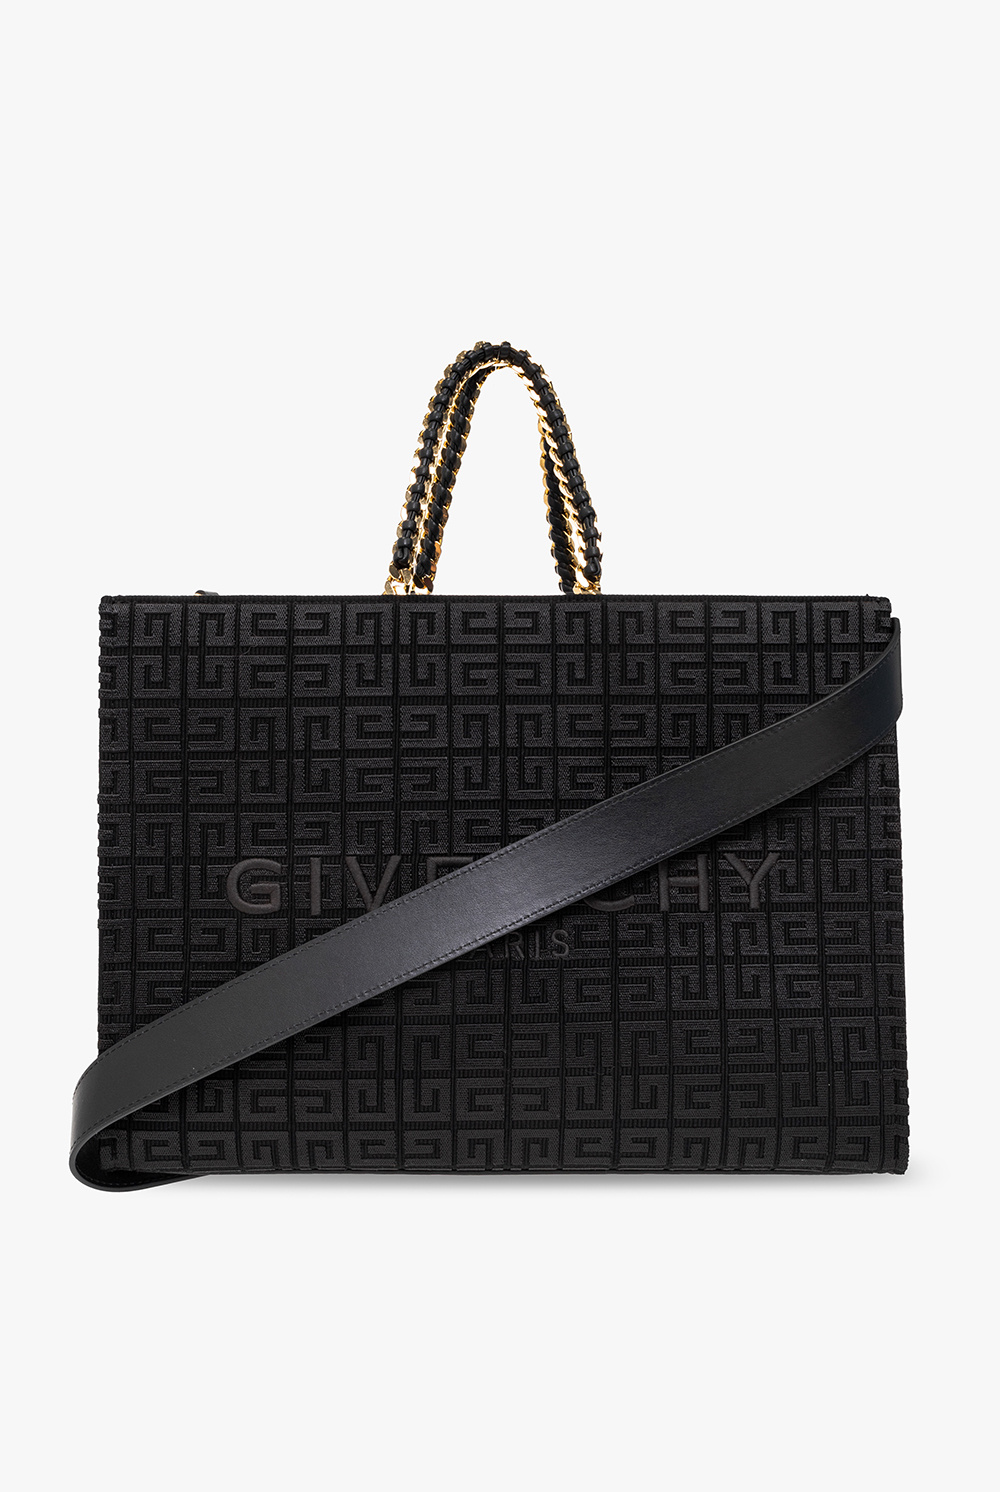 Givenchy ‘G-Tote Medium’ shoulder bag